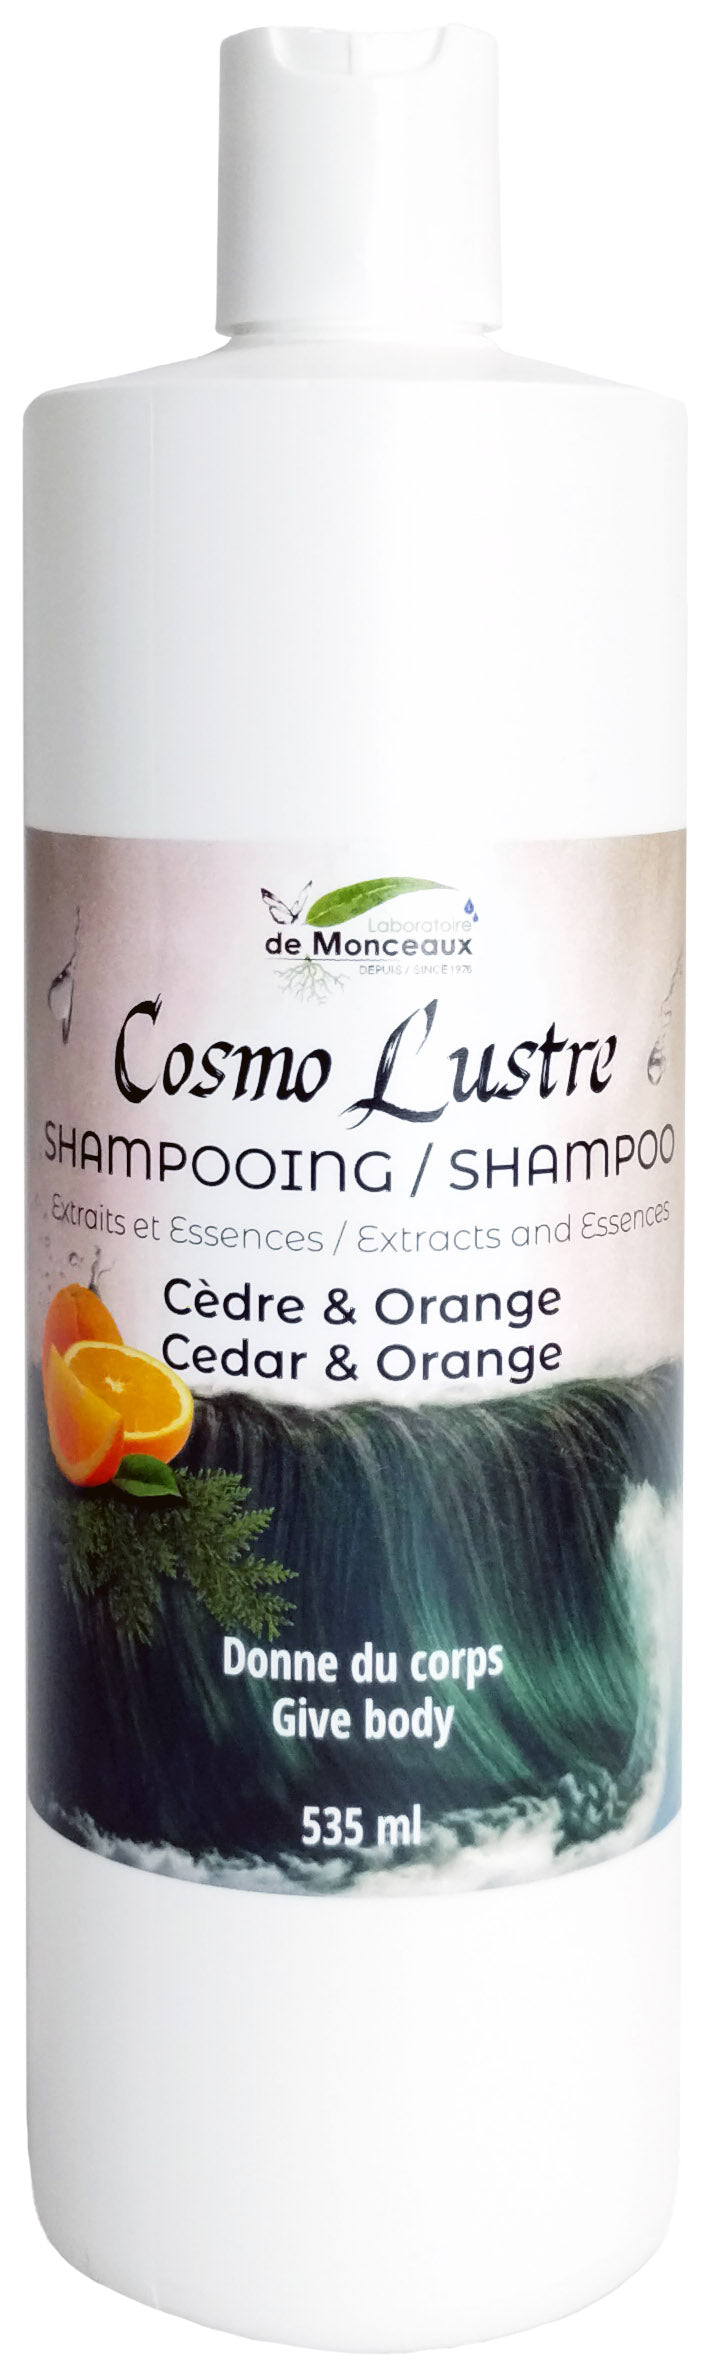 Cedar and orange shampoo 535ml